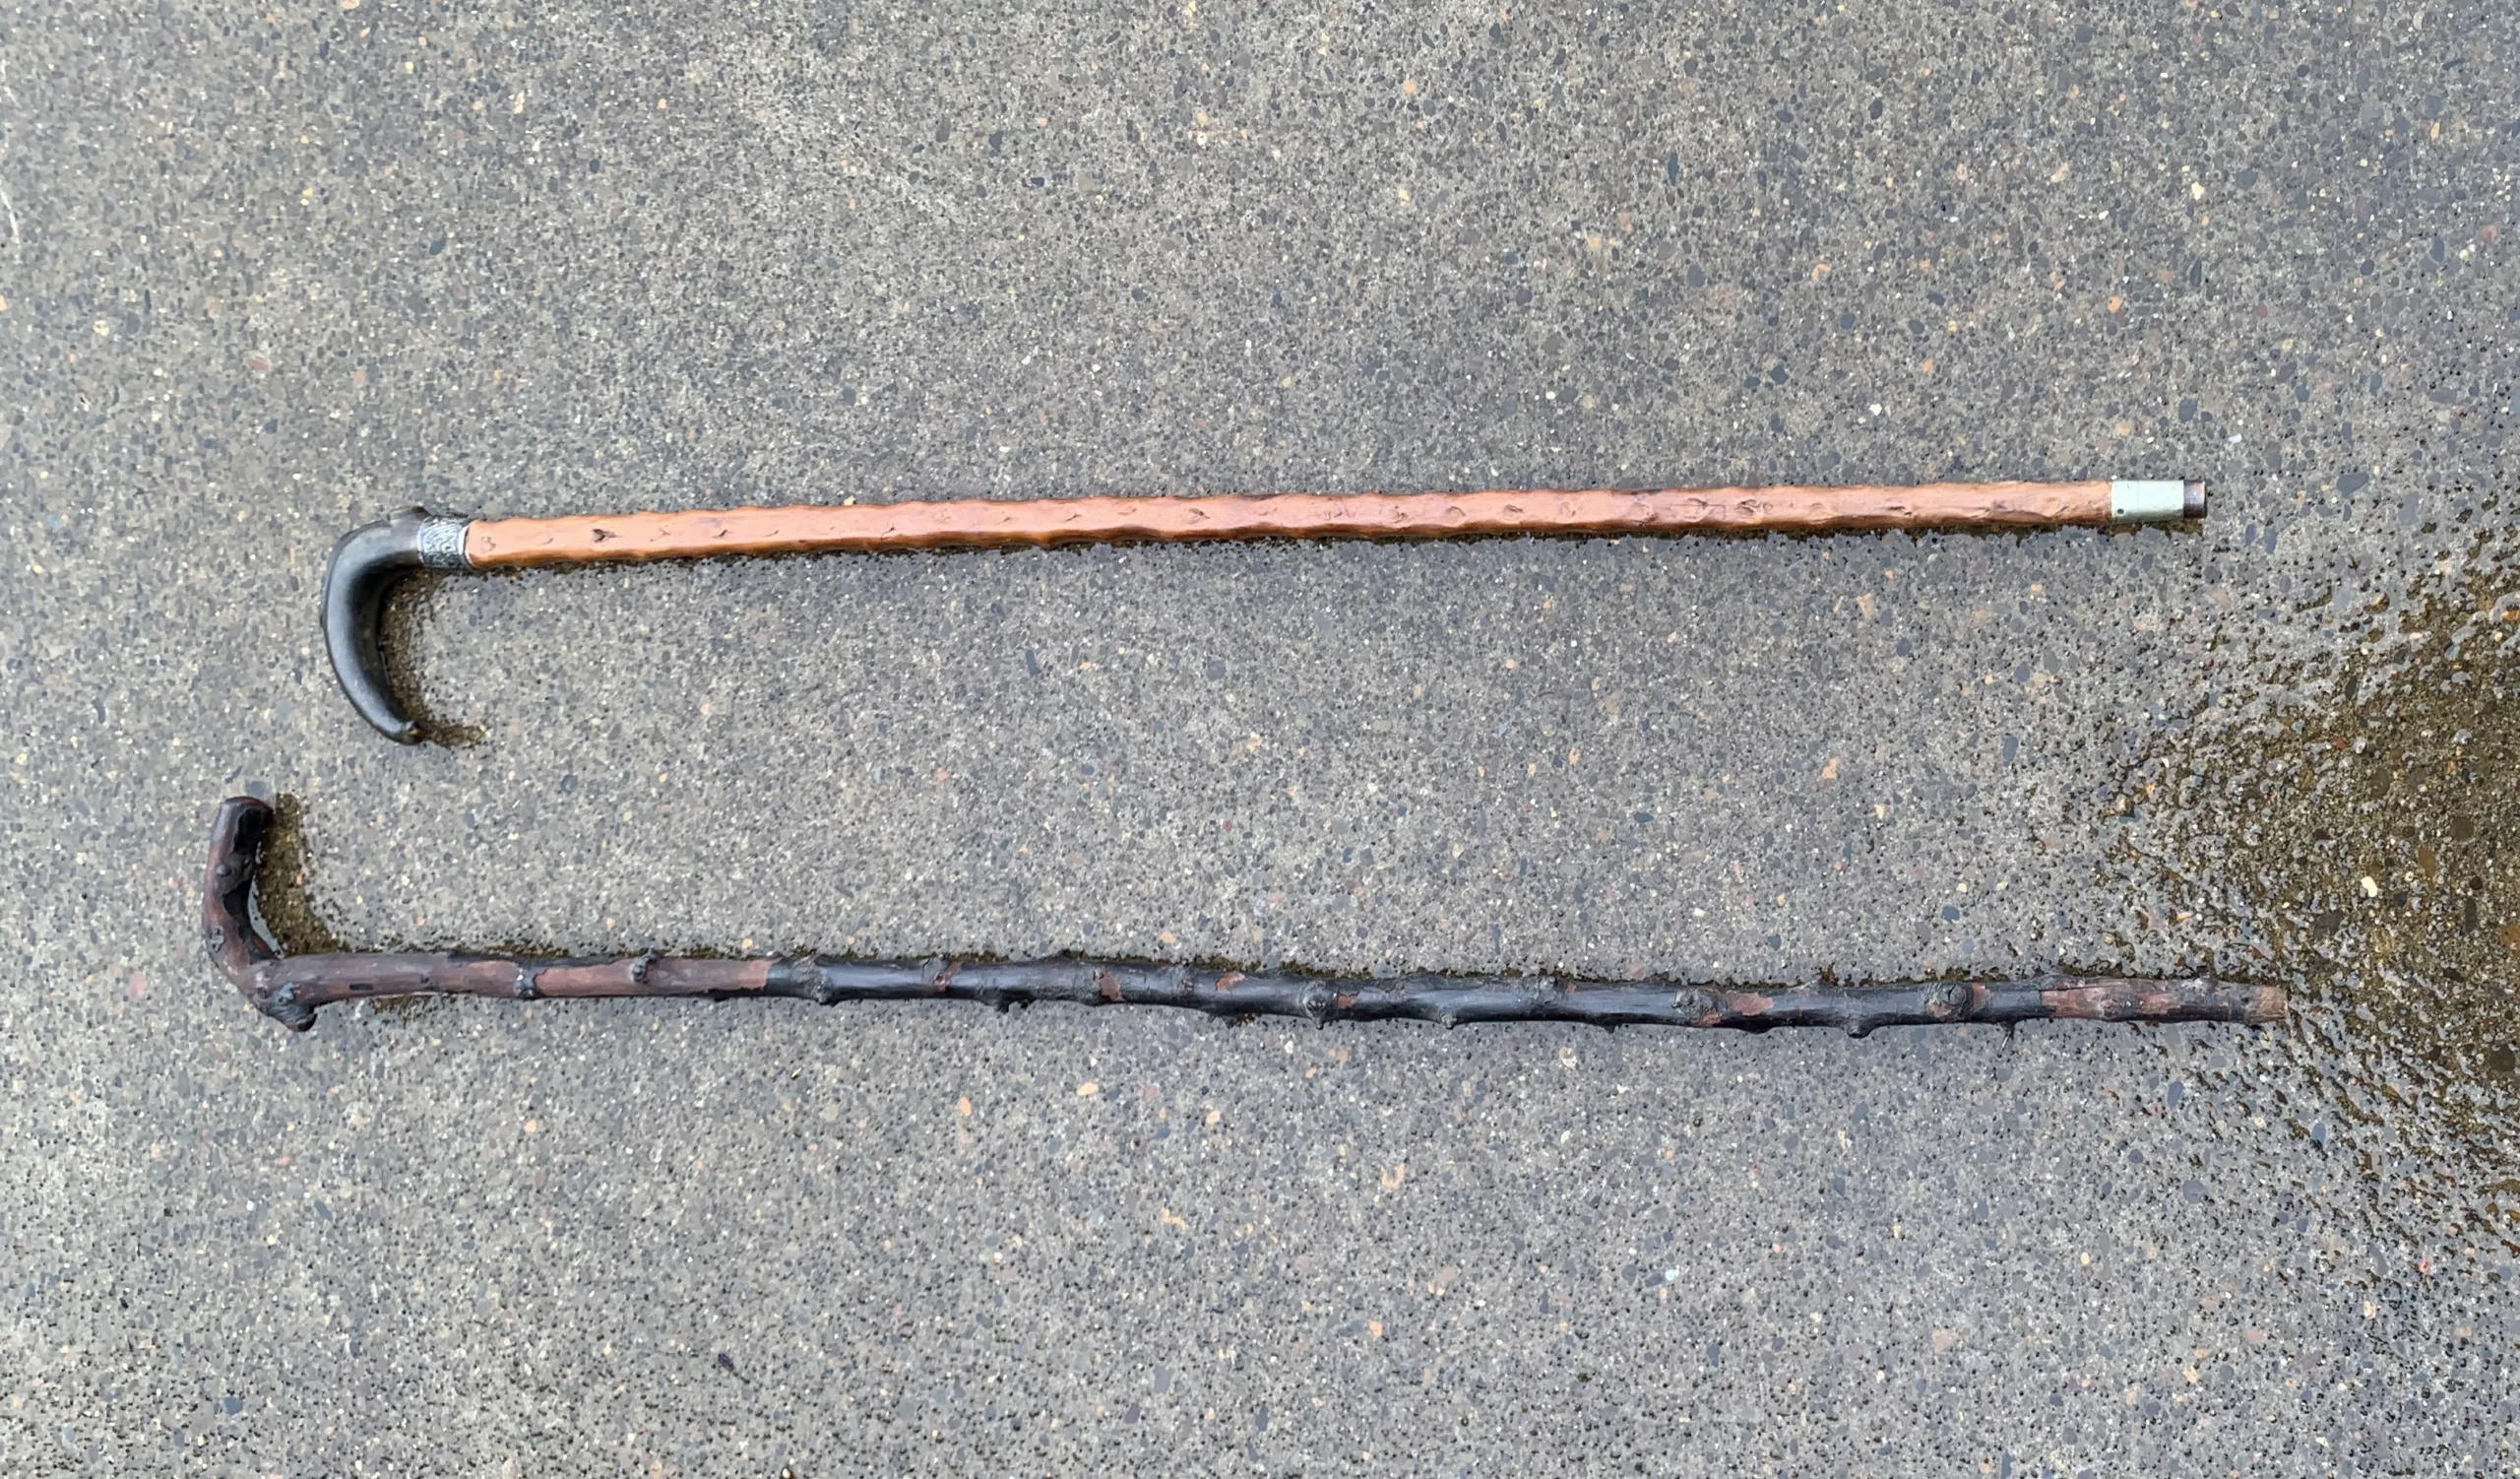 Blackthorn Walking Stick or Weapon